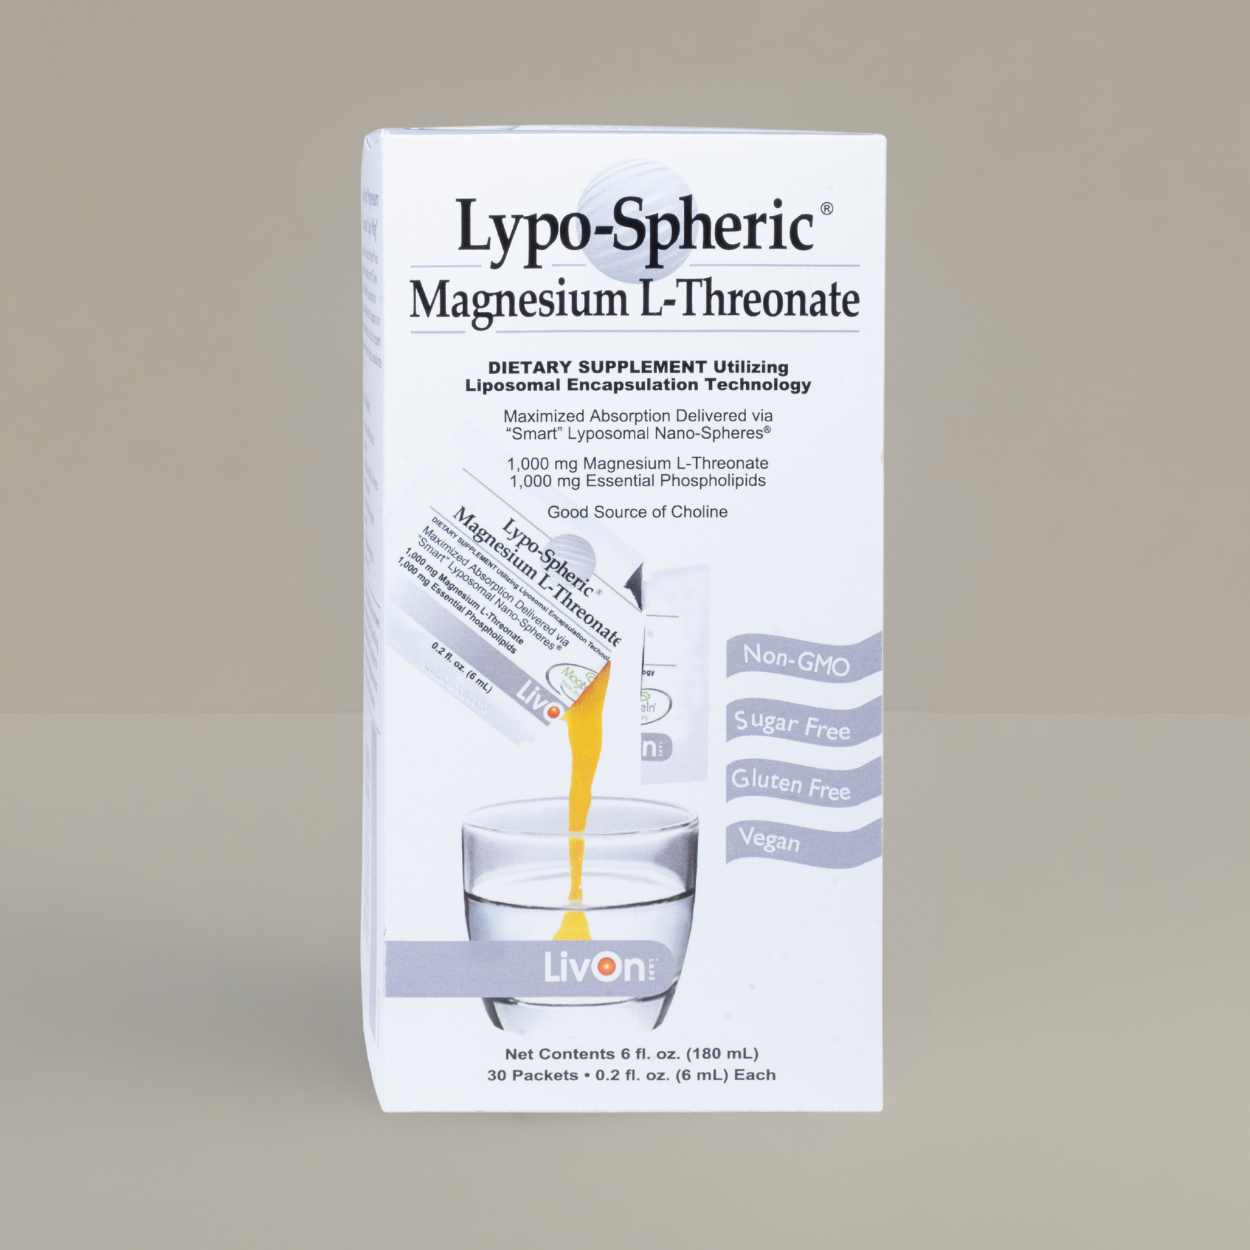 Staff: Lypo-Spheric® Magnesium L-Threonate